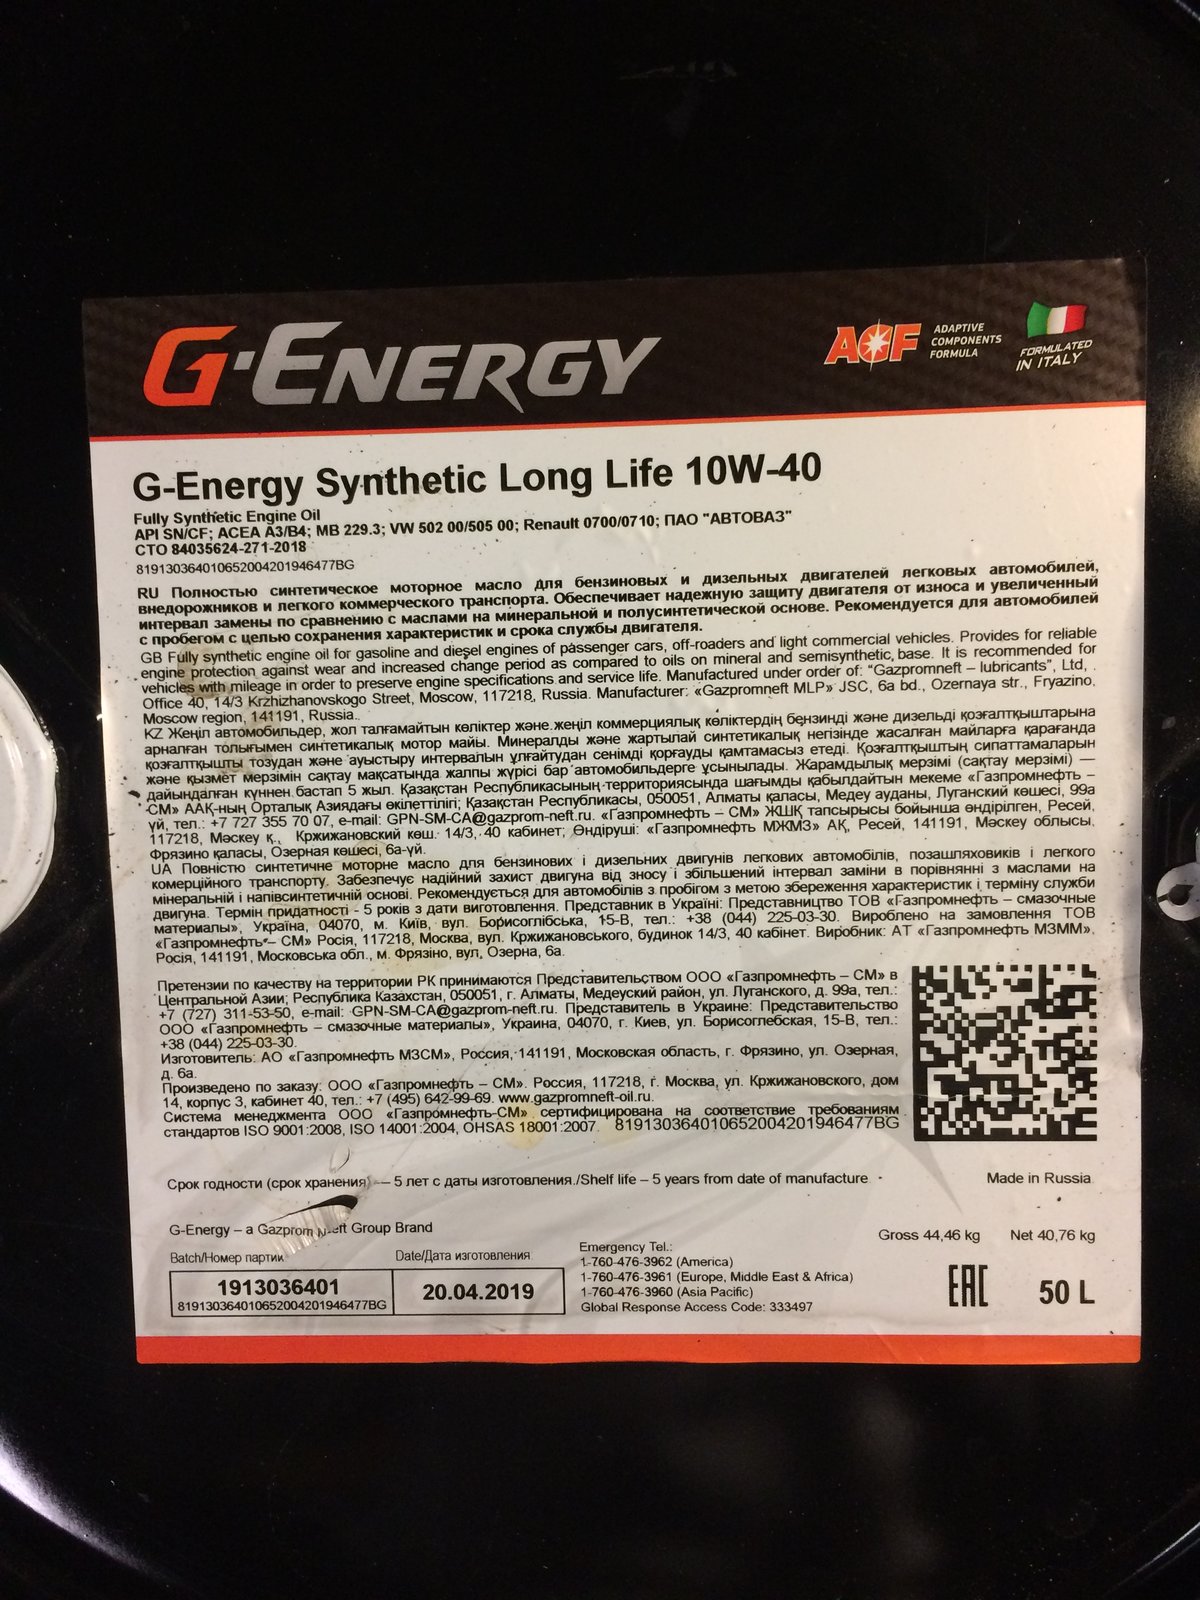 G energy synthetic long life. G Energy 10w 40 long Life. G Energy Synthetic 10w 40 long Life 1l. G-Energy Synthetic long Life 10w-40 API SN/CF, ACEA a3/b4 (205 л). G Energy 10w 40 Full Synthetic.